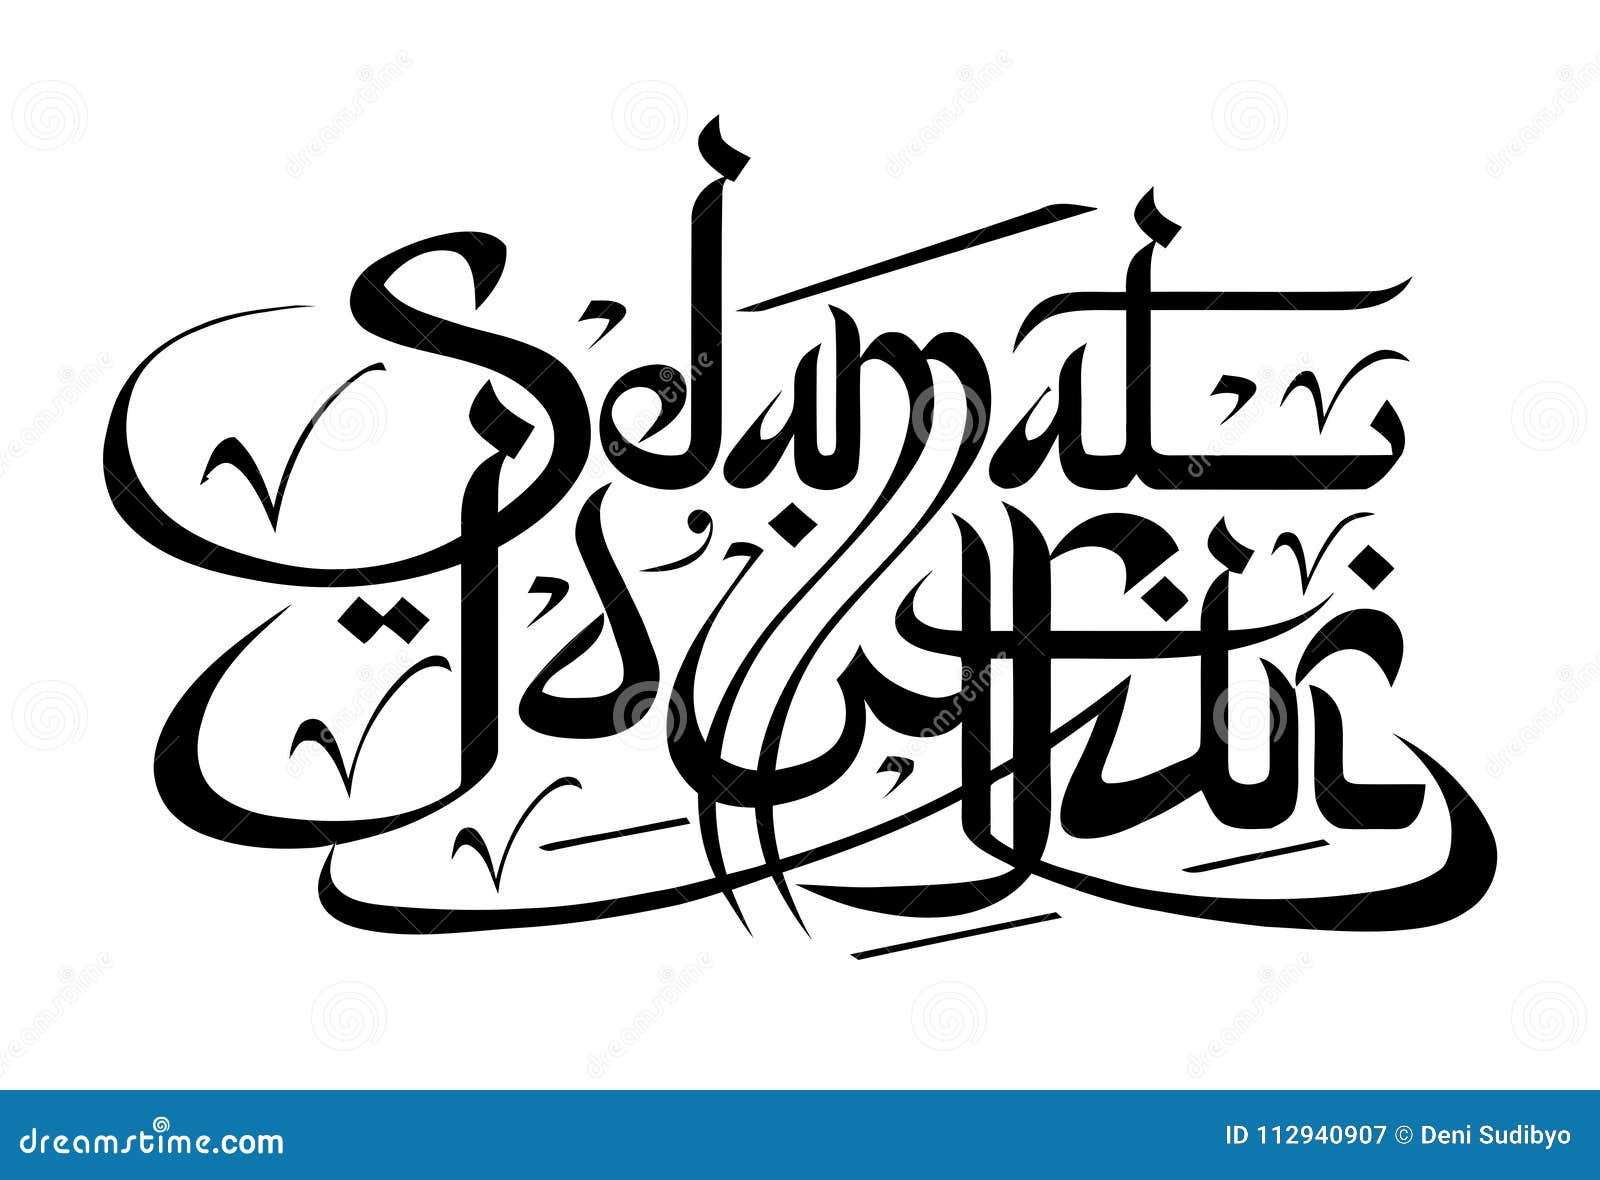 Selamat Hari Raya Idul Fitri Stock Illustration 